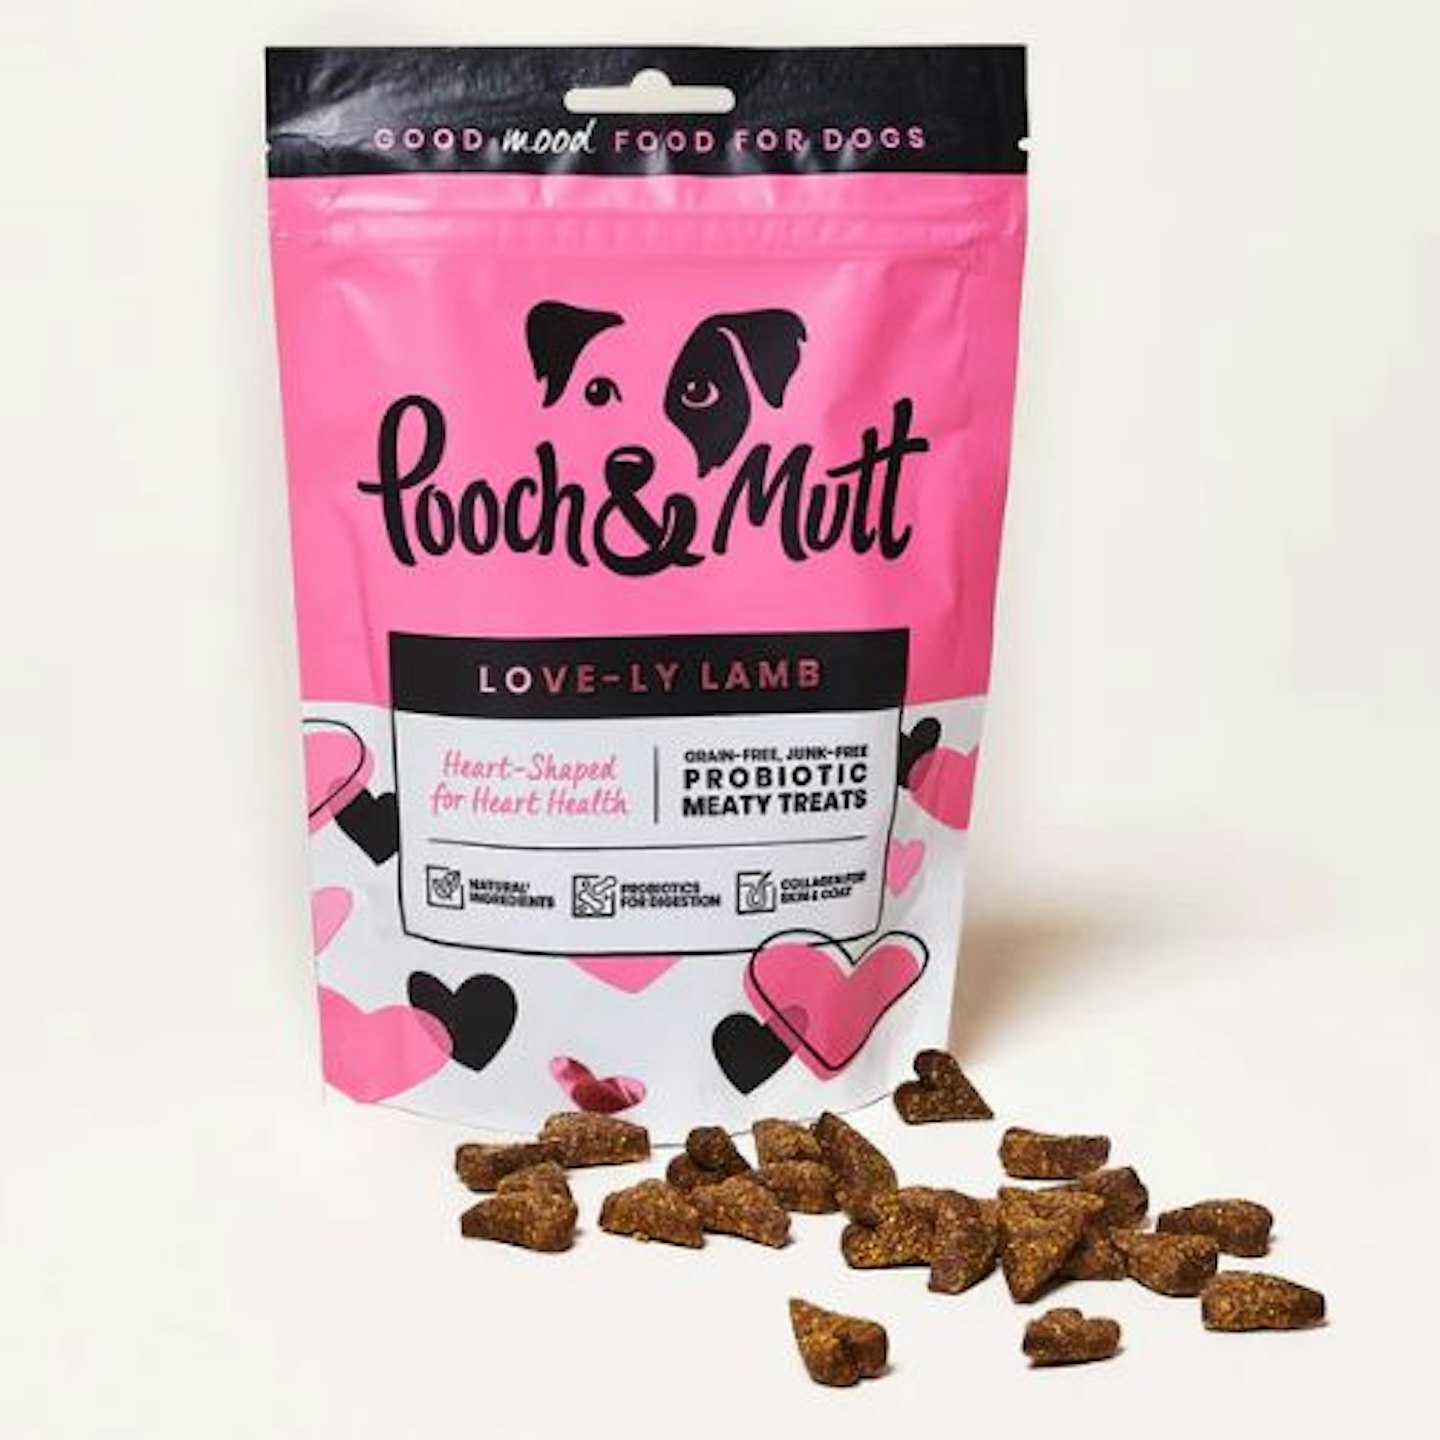 Pooch & Mutt Love-ly Lamb Probiotic Meaty Treats